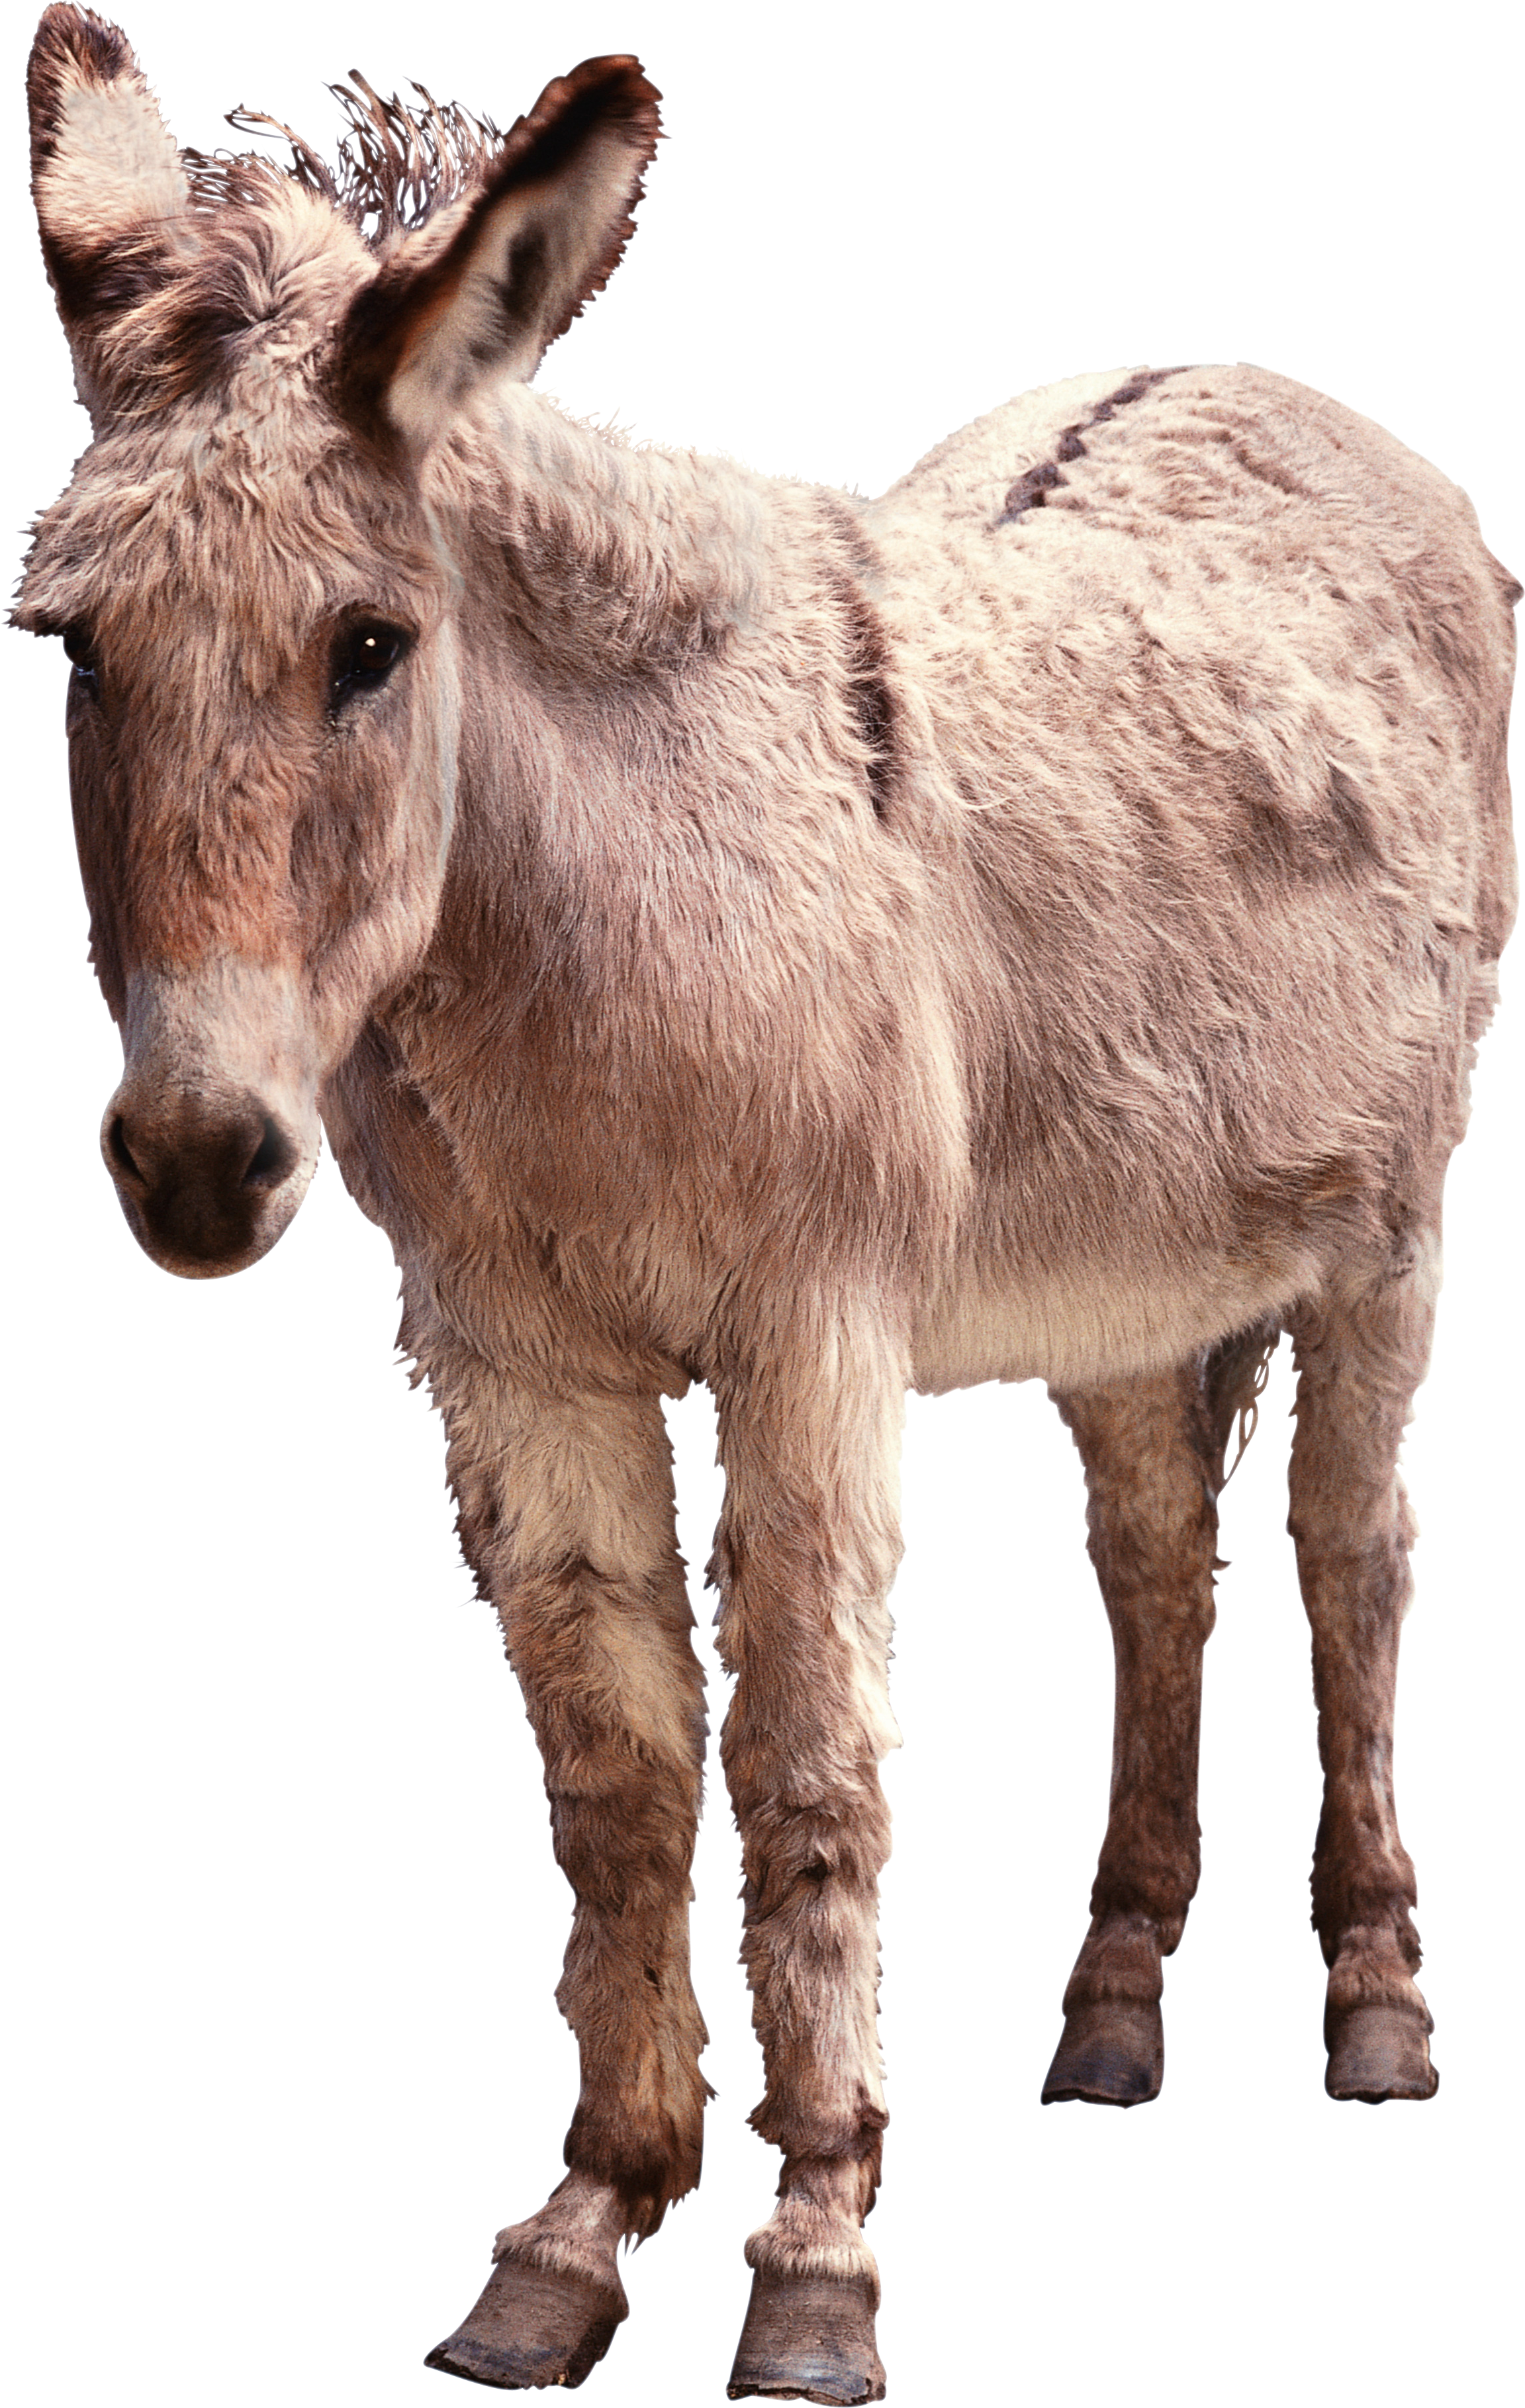 Donkey HD Animals Photo Download